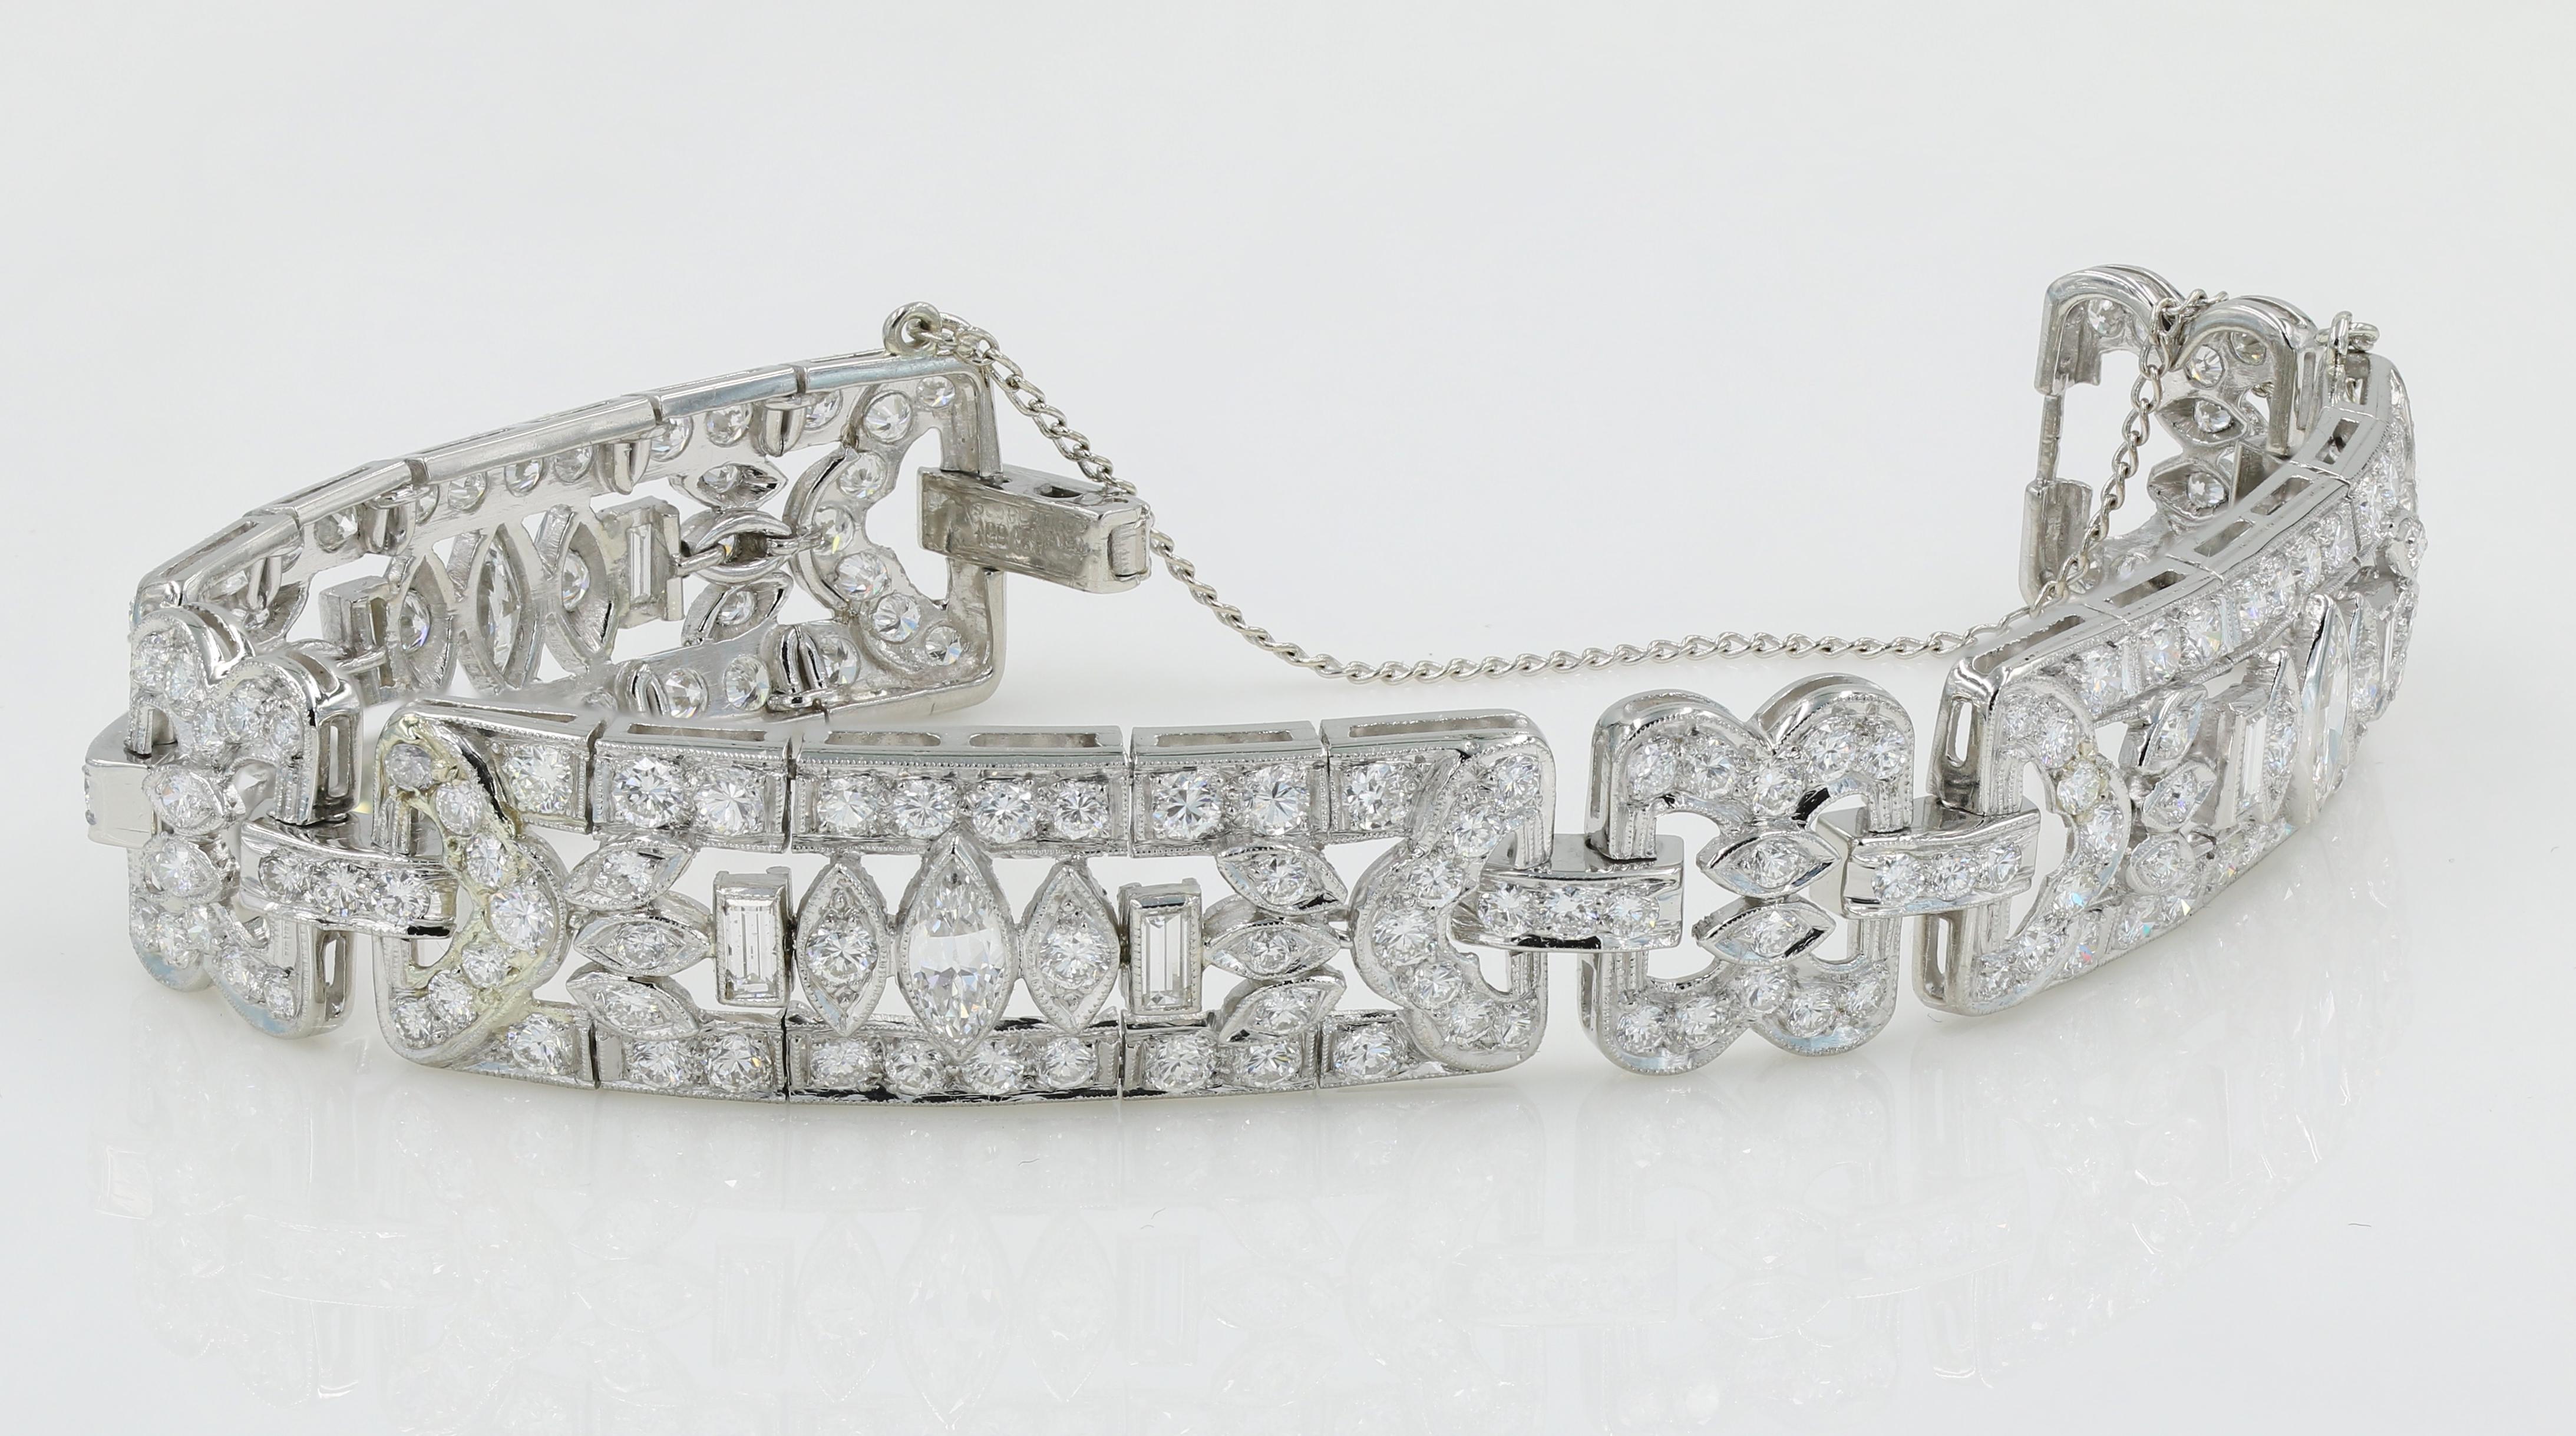 Art Deco Diamond Bracelet in Platinum - Featuring 3 MQ cut Diamonds about 1.00ctw, 6 Baguette cut Diamonds about 0.90ctw, & 180 Round cut Diamonds about 6.72ctw. Bracelet is hand made, circa 1920 - 1930's. Diamonds are G-H color, VS clarity. It